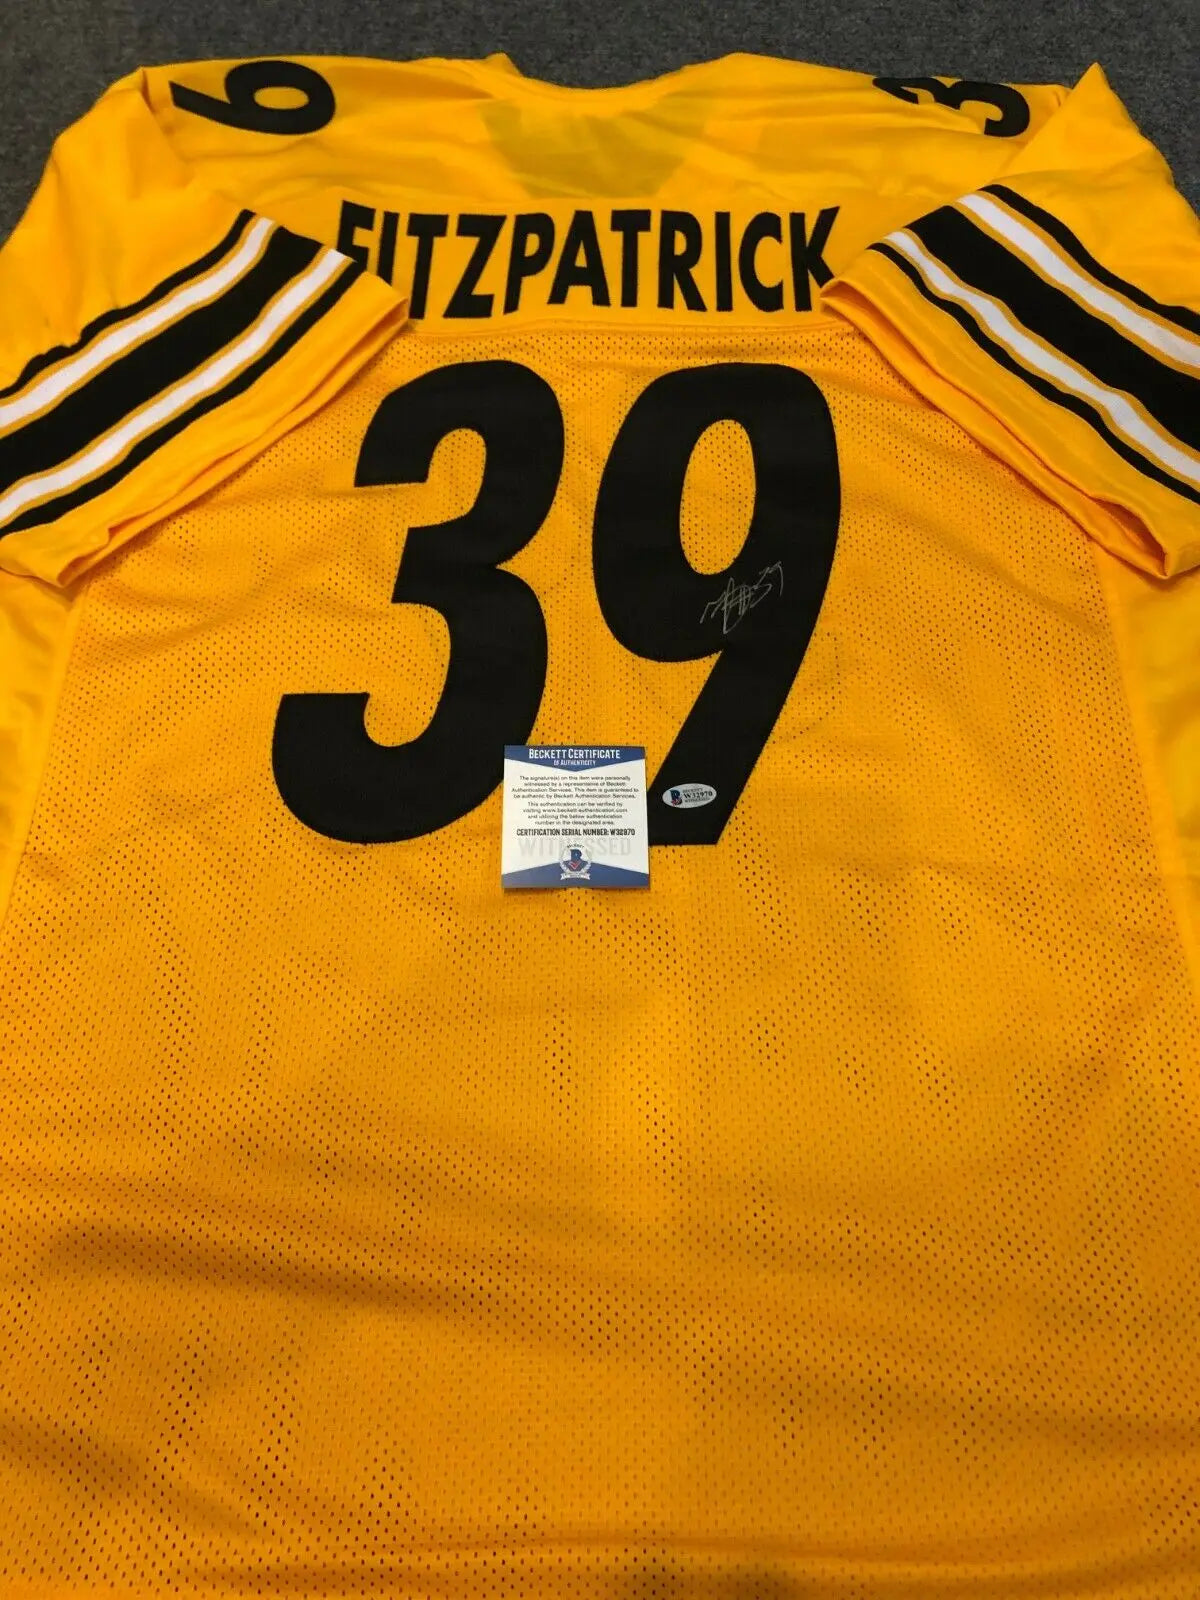 minkah fitzpatrick jersey number